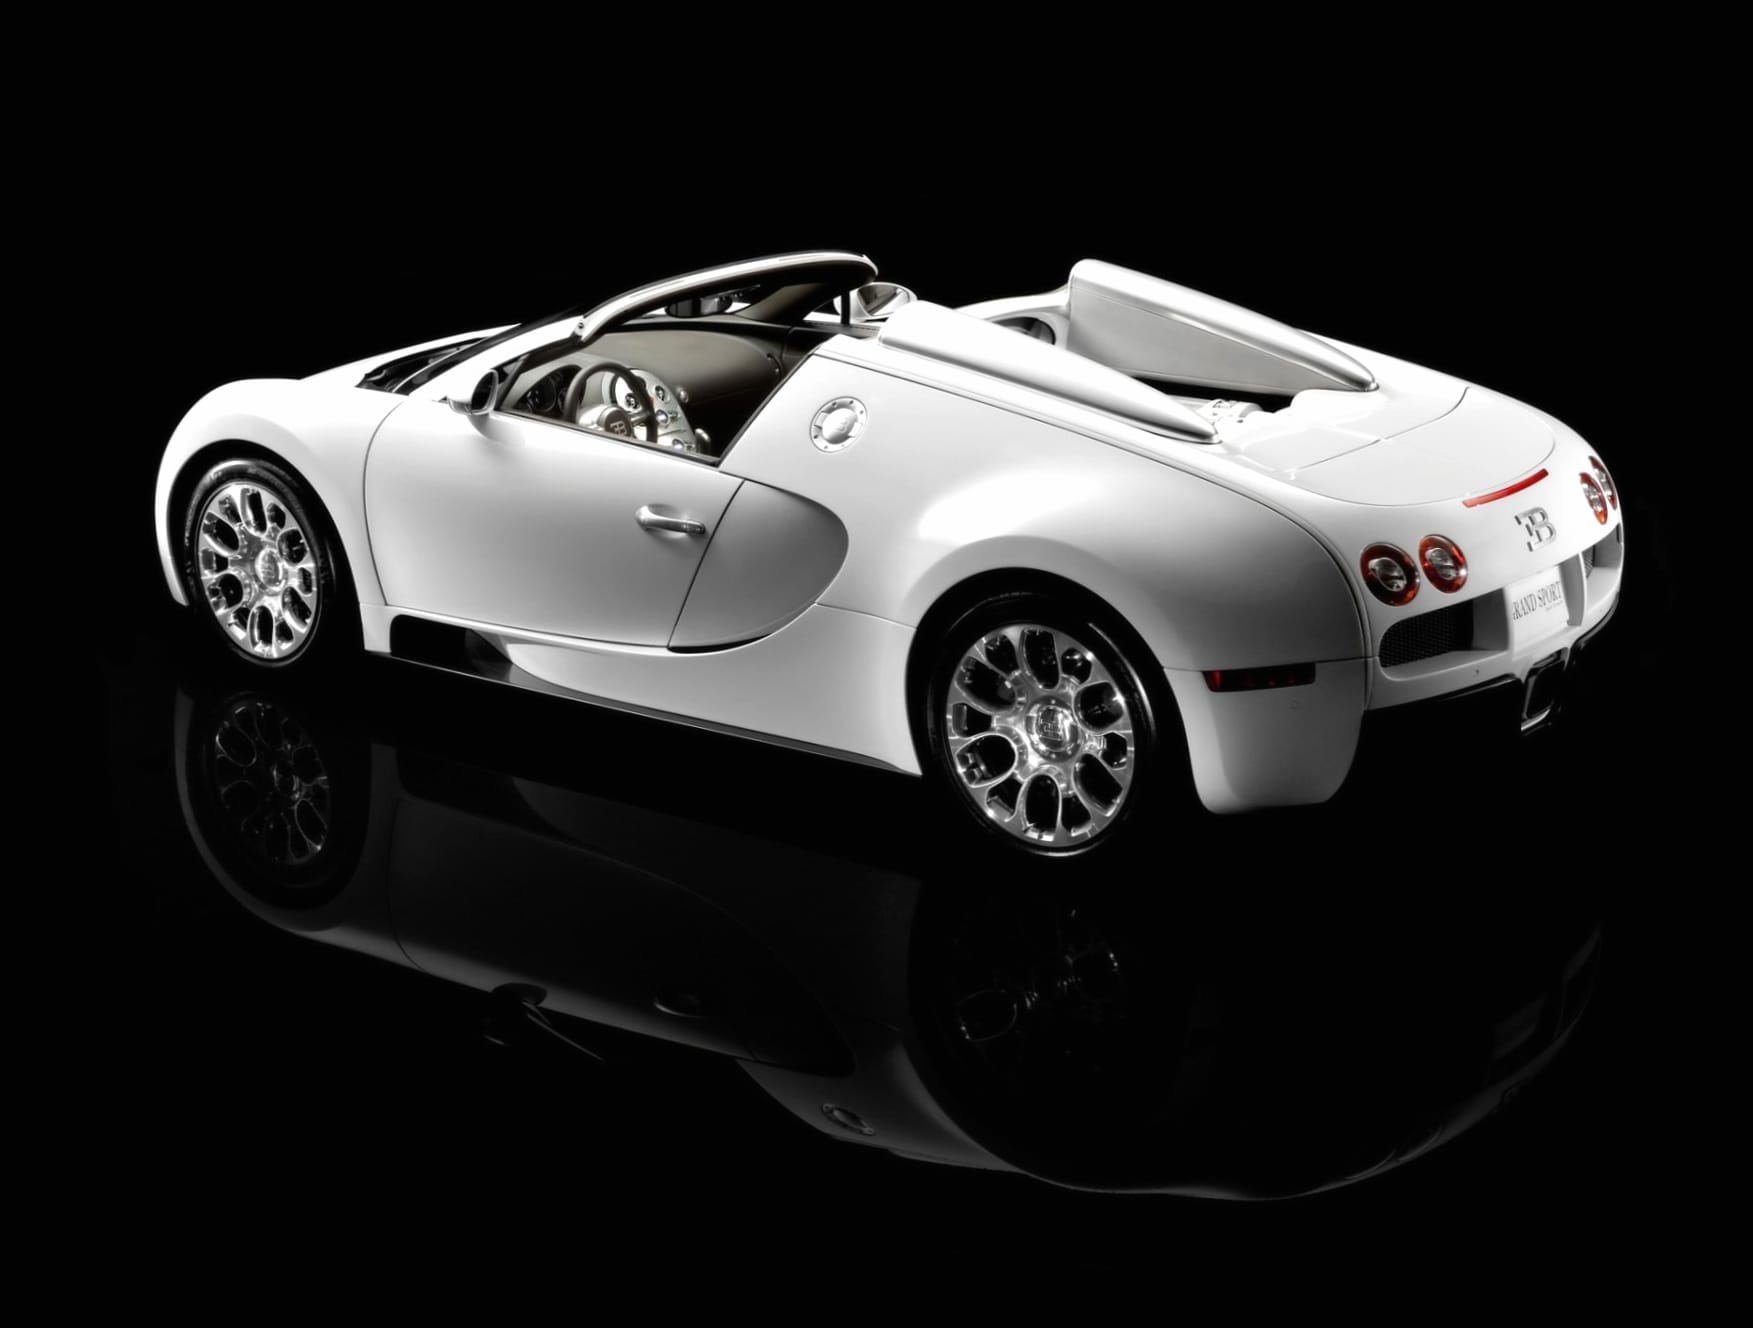 Bugatti Veyron 16-4 Grand Sport at 1024 x 768 size wallpapers HD quality